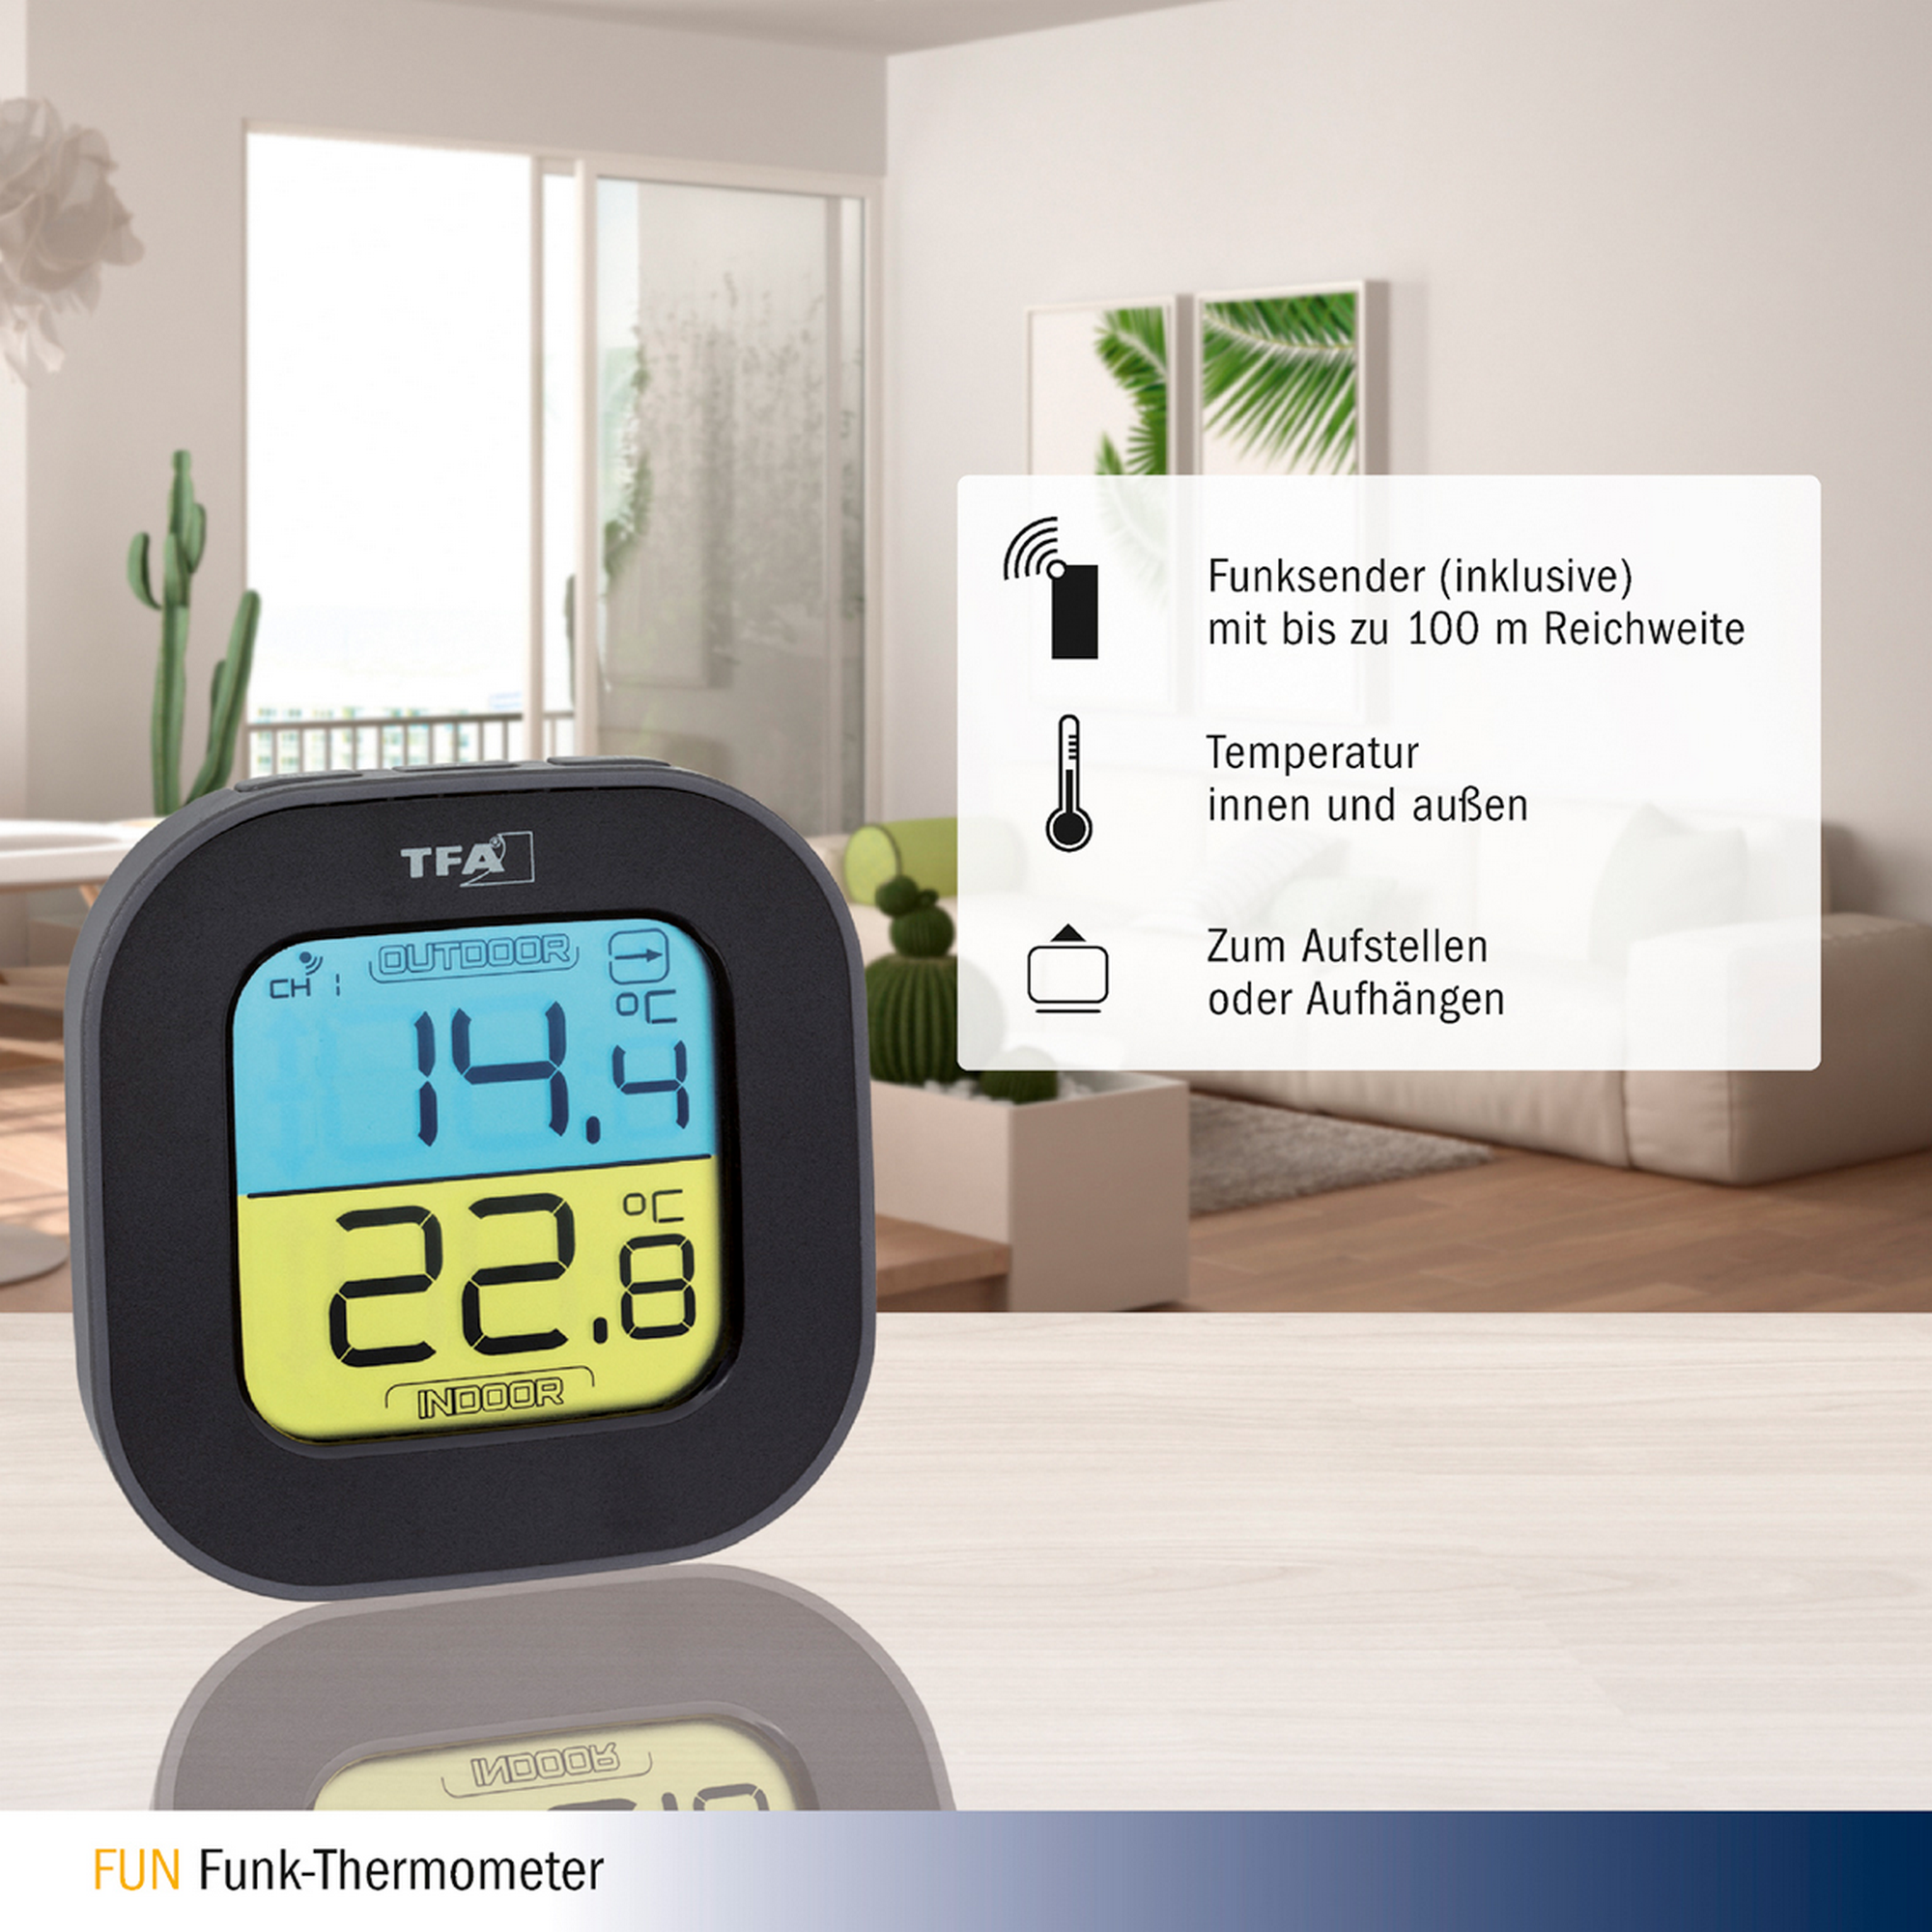 Funk-Thermometer 'FUN' mit Aussensensor + product picture